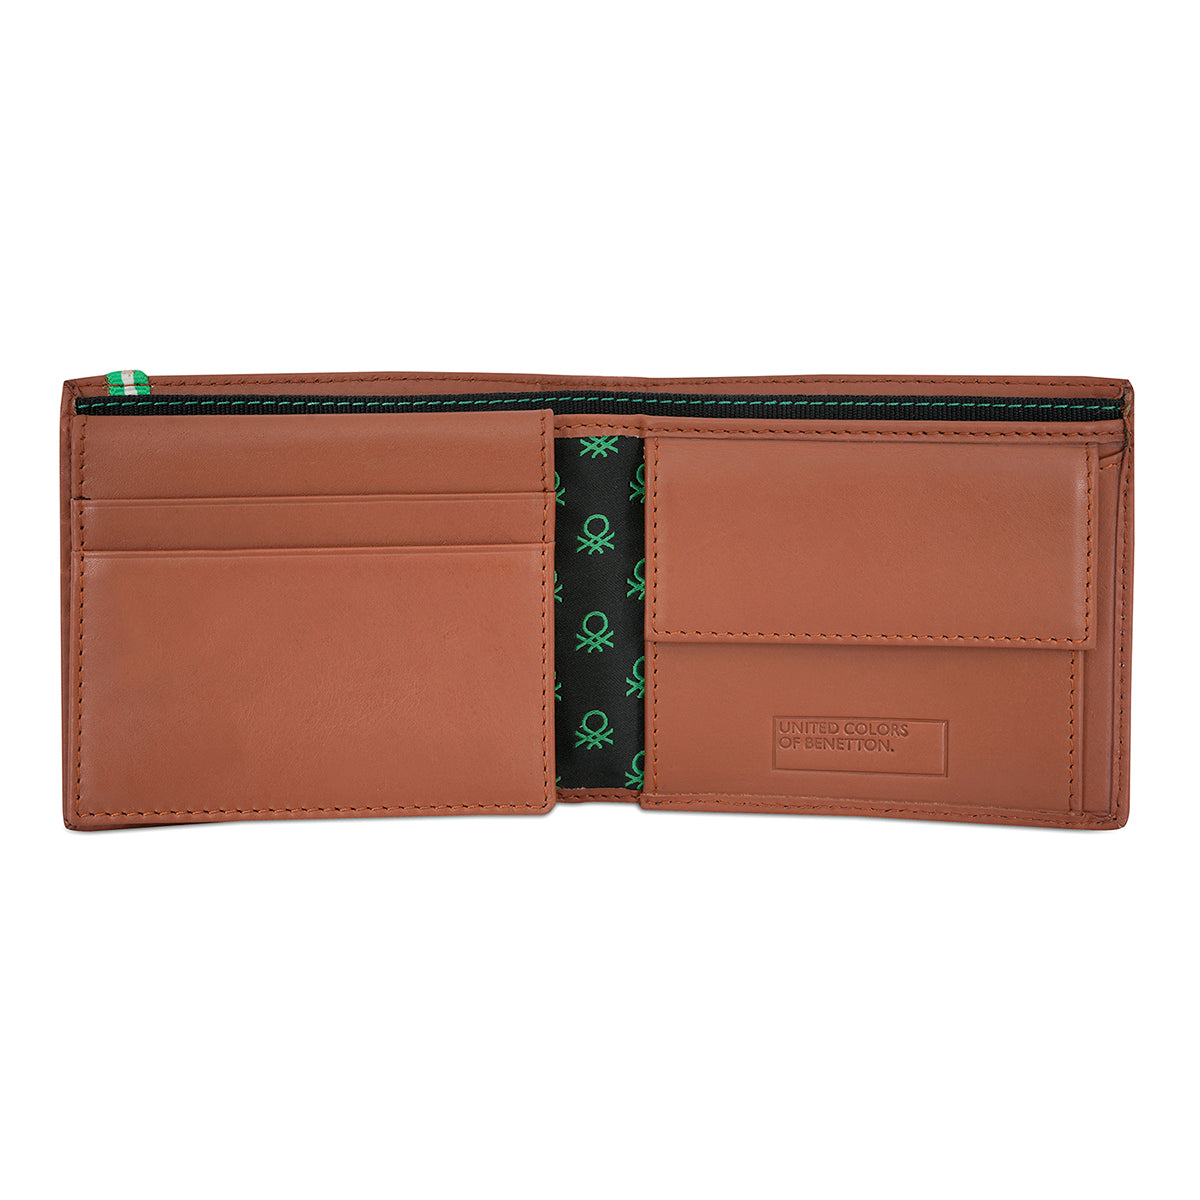 United Colors of Benetton Ridge Multicard Coin Wallet Tan